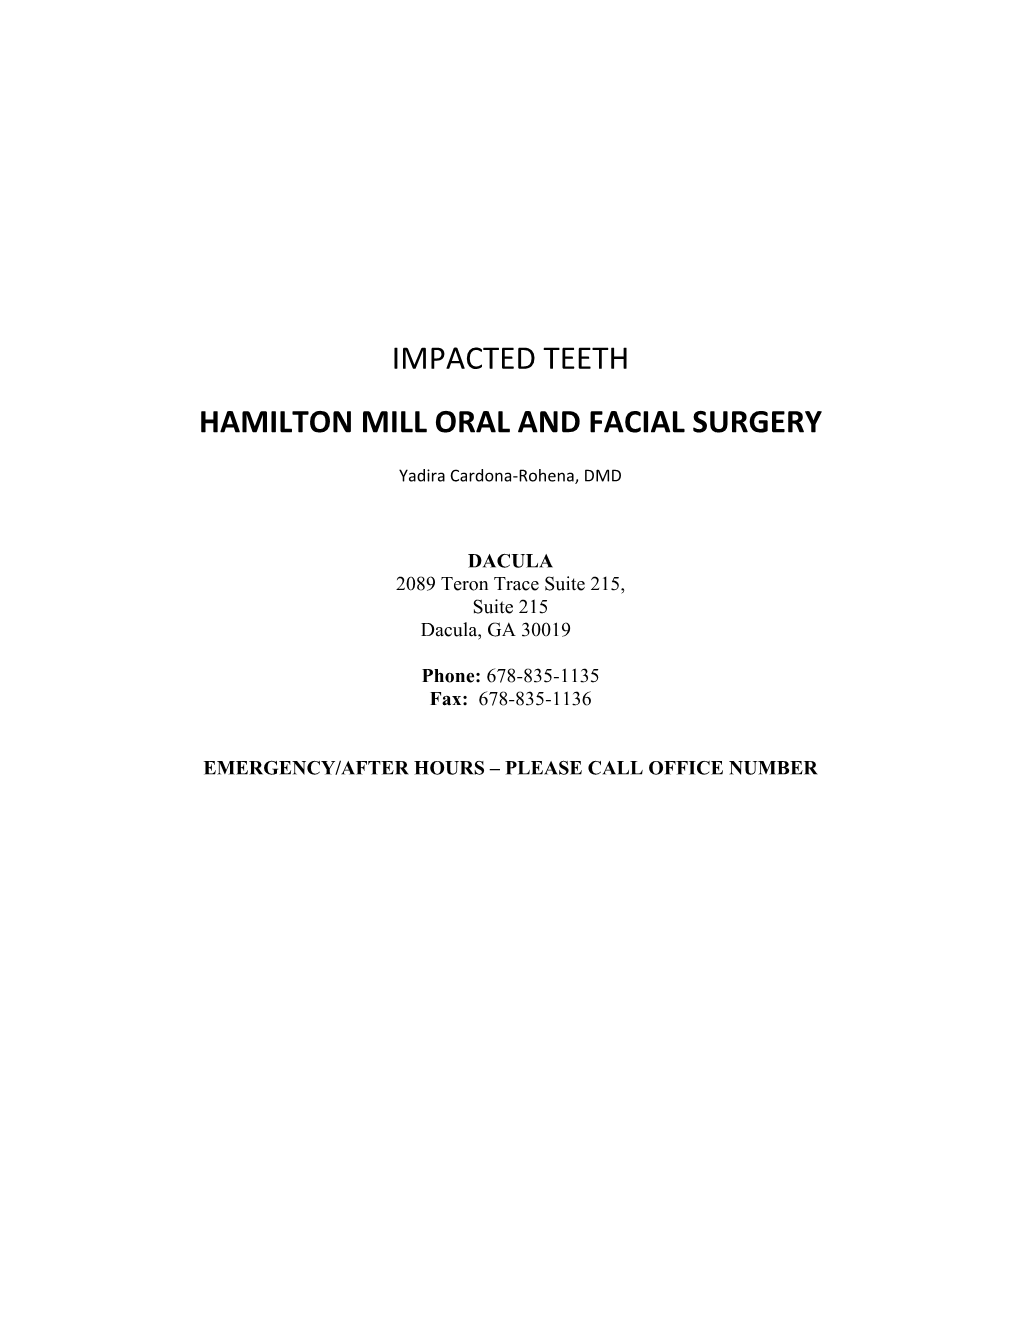 Impacted Teeth Hamilton Mill Oral and Facial Surgery